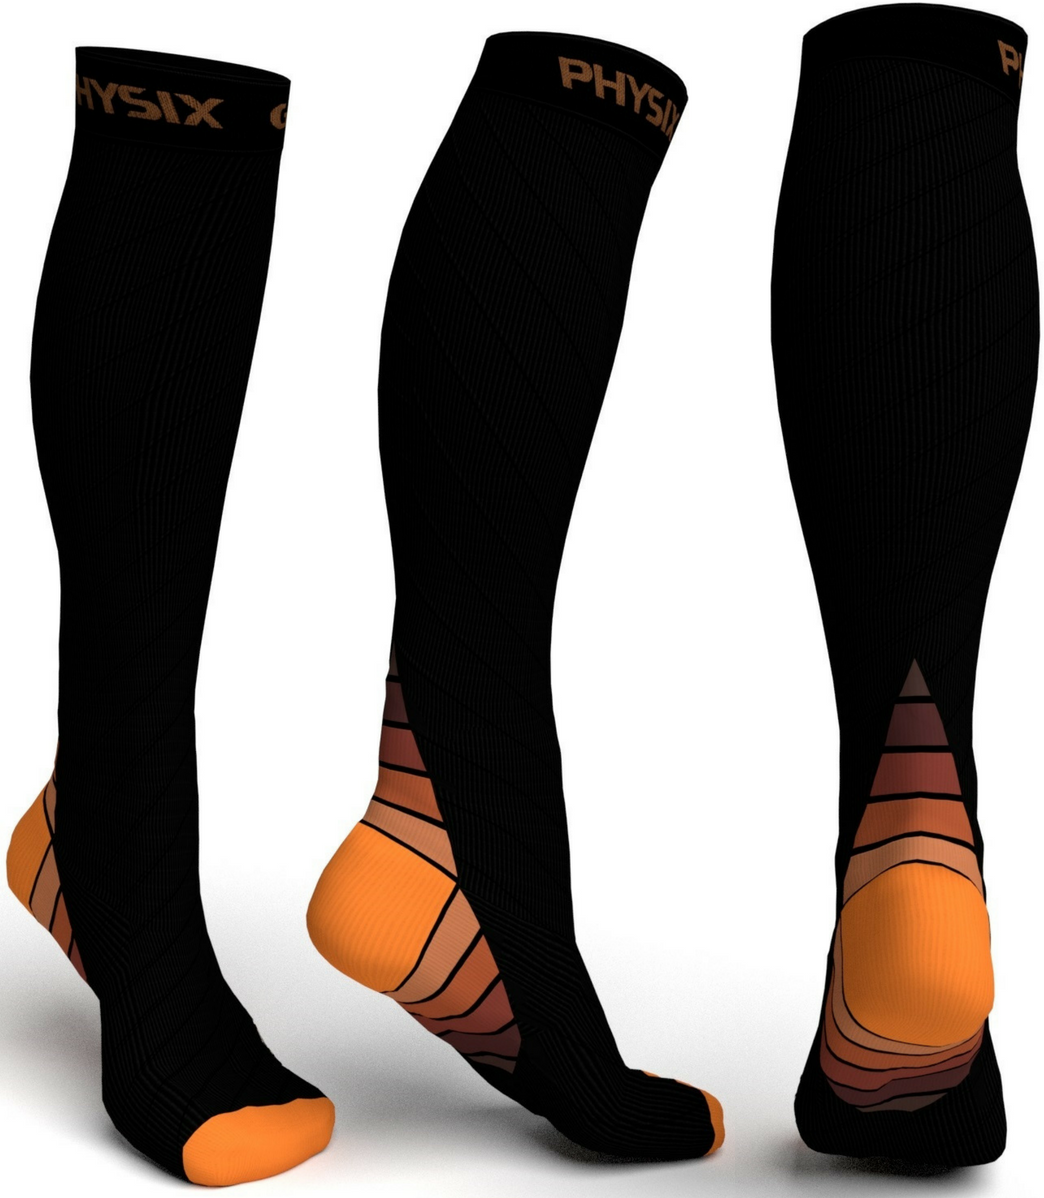  Men's Sports Compression Pants & Tights - Orange